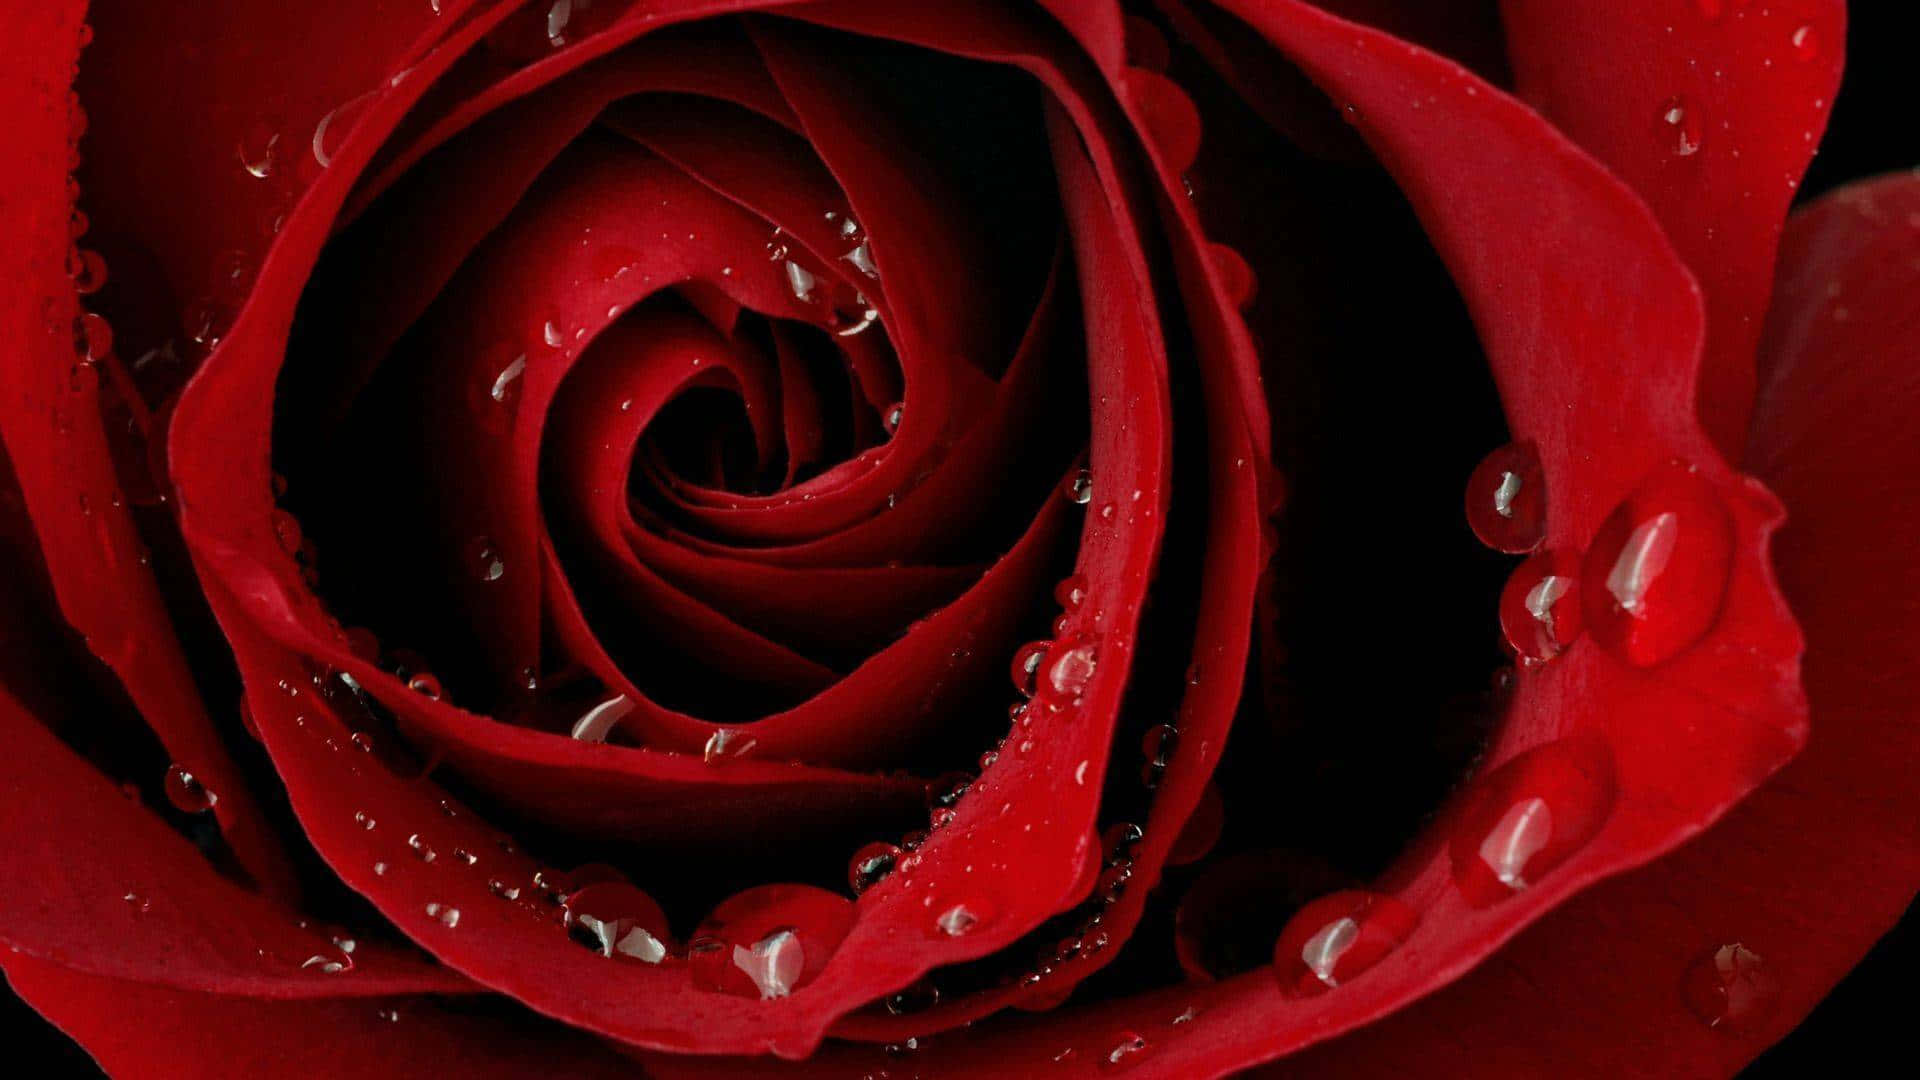 A delicate rose in full bloom